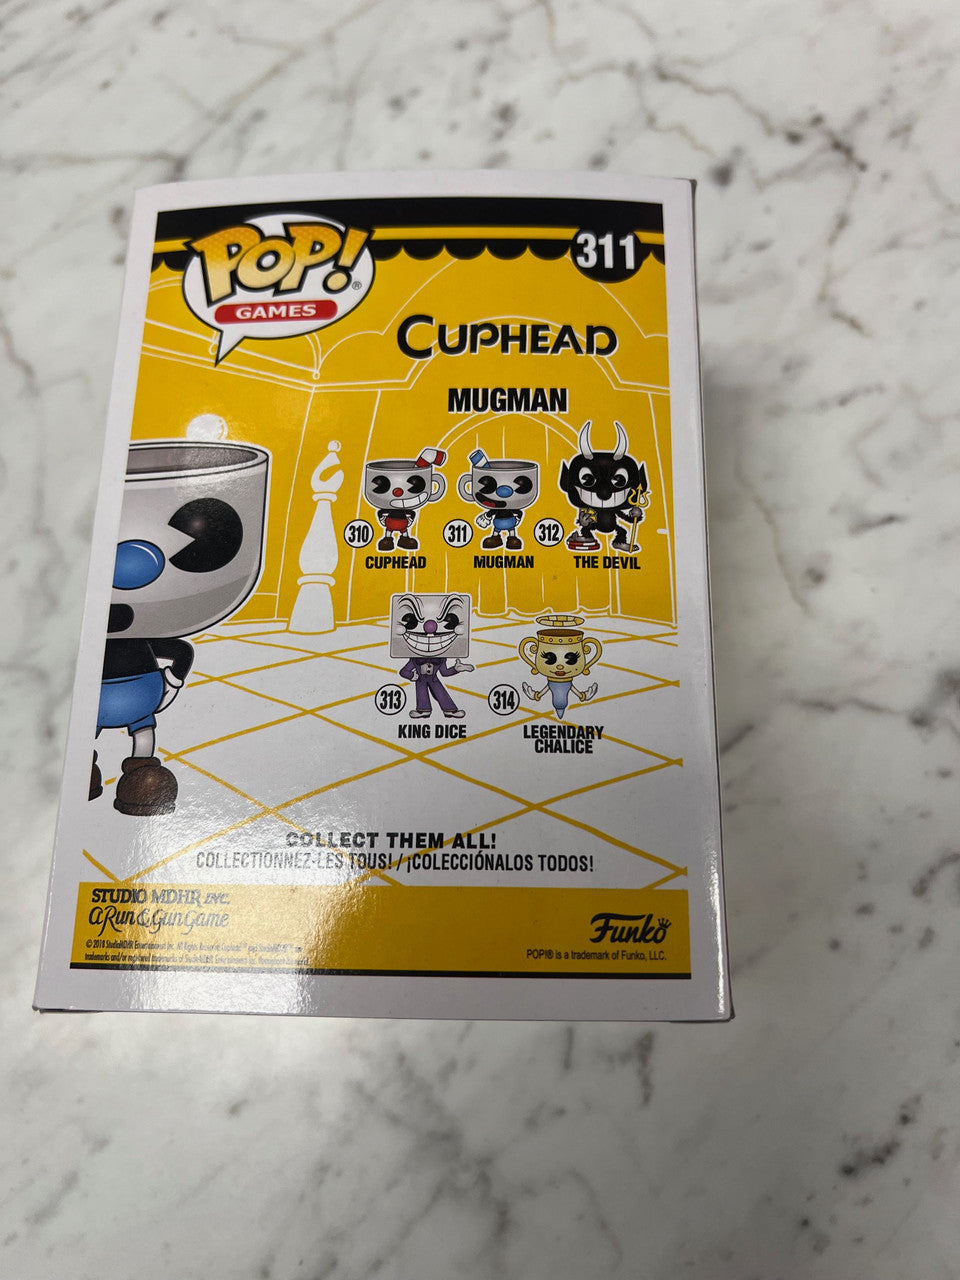 Cuphead Funko POP! Games - Mugman #311 Vinyl Figure